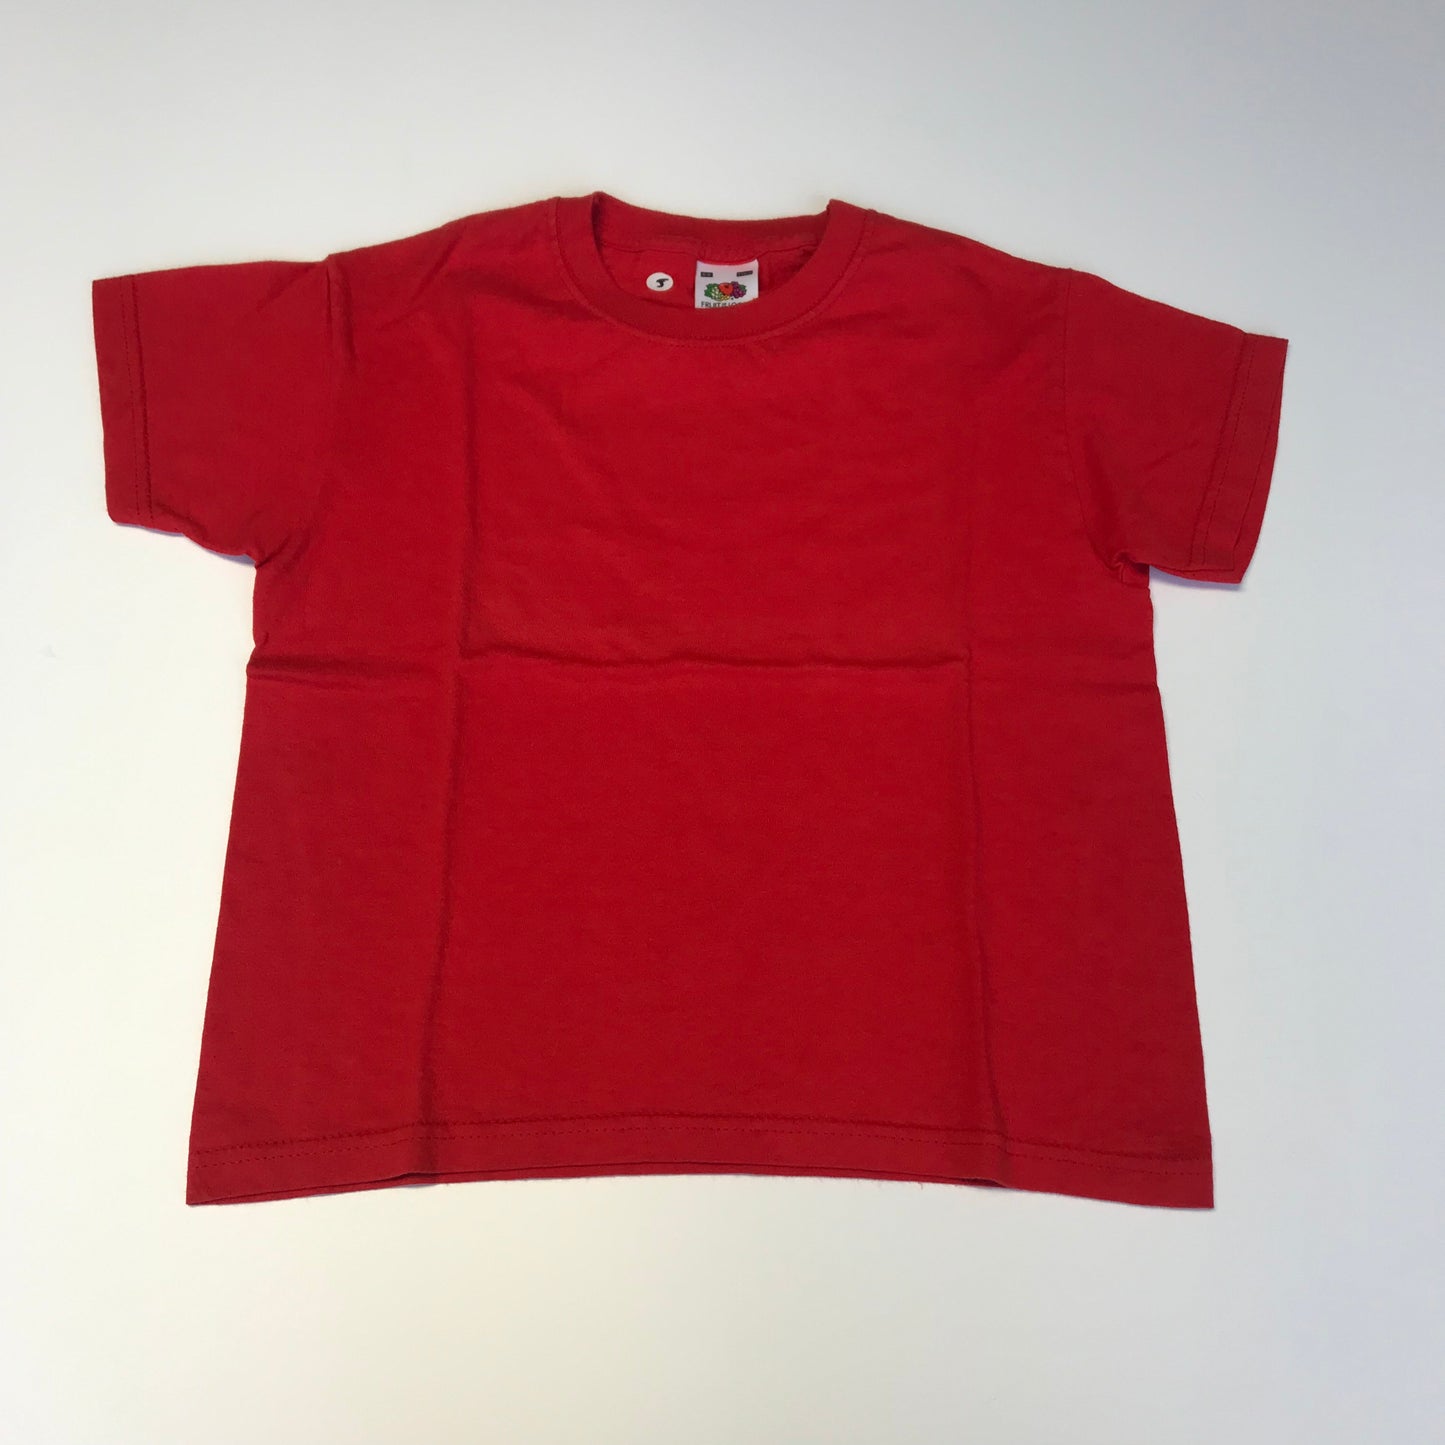 Plain Red Gym T-shirt